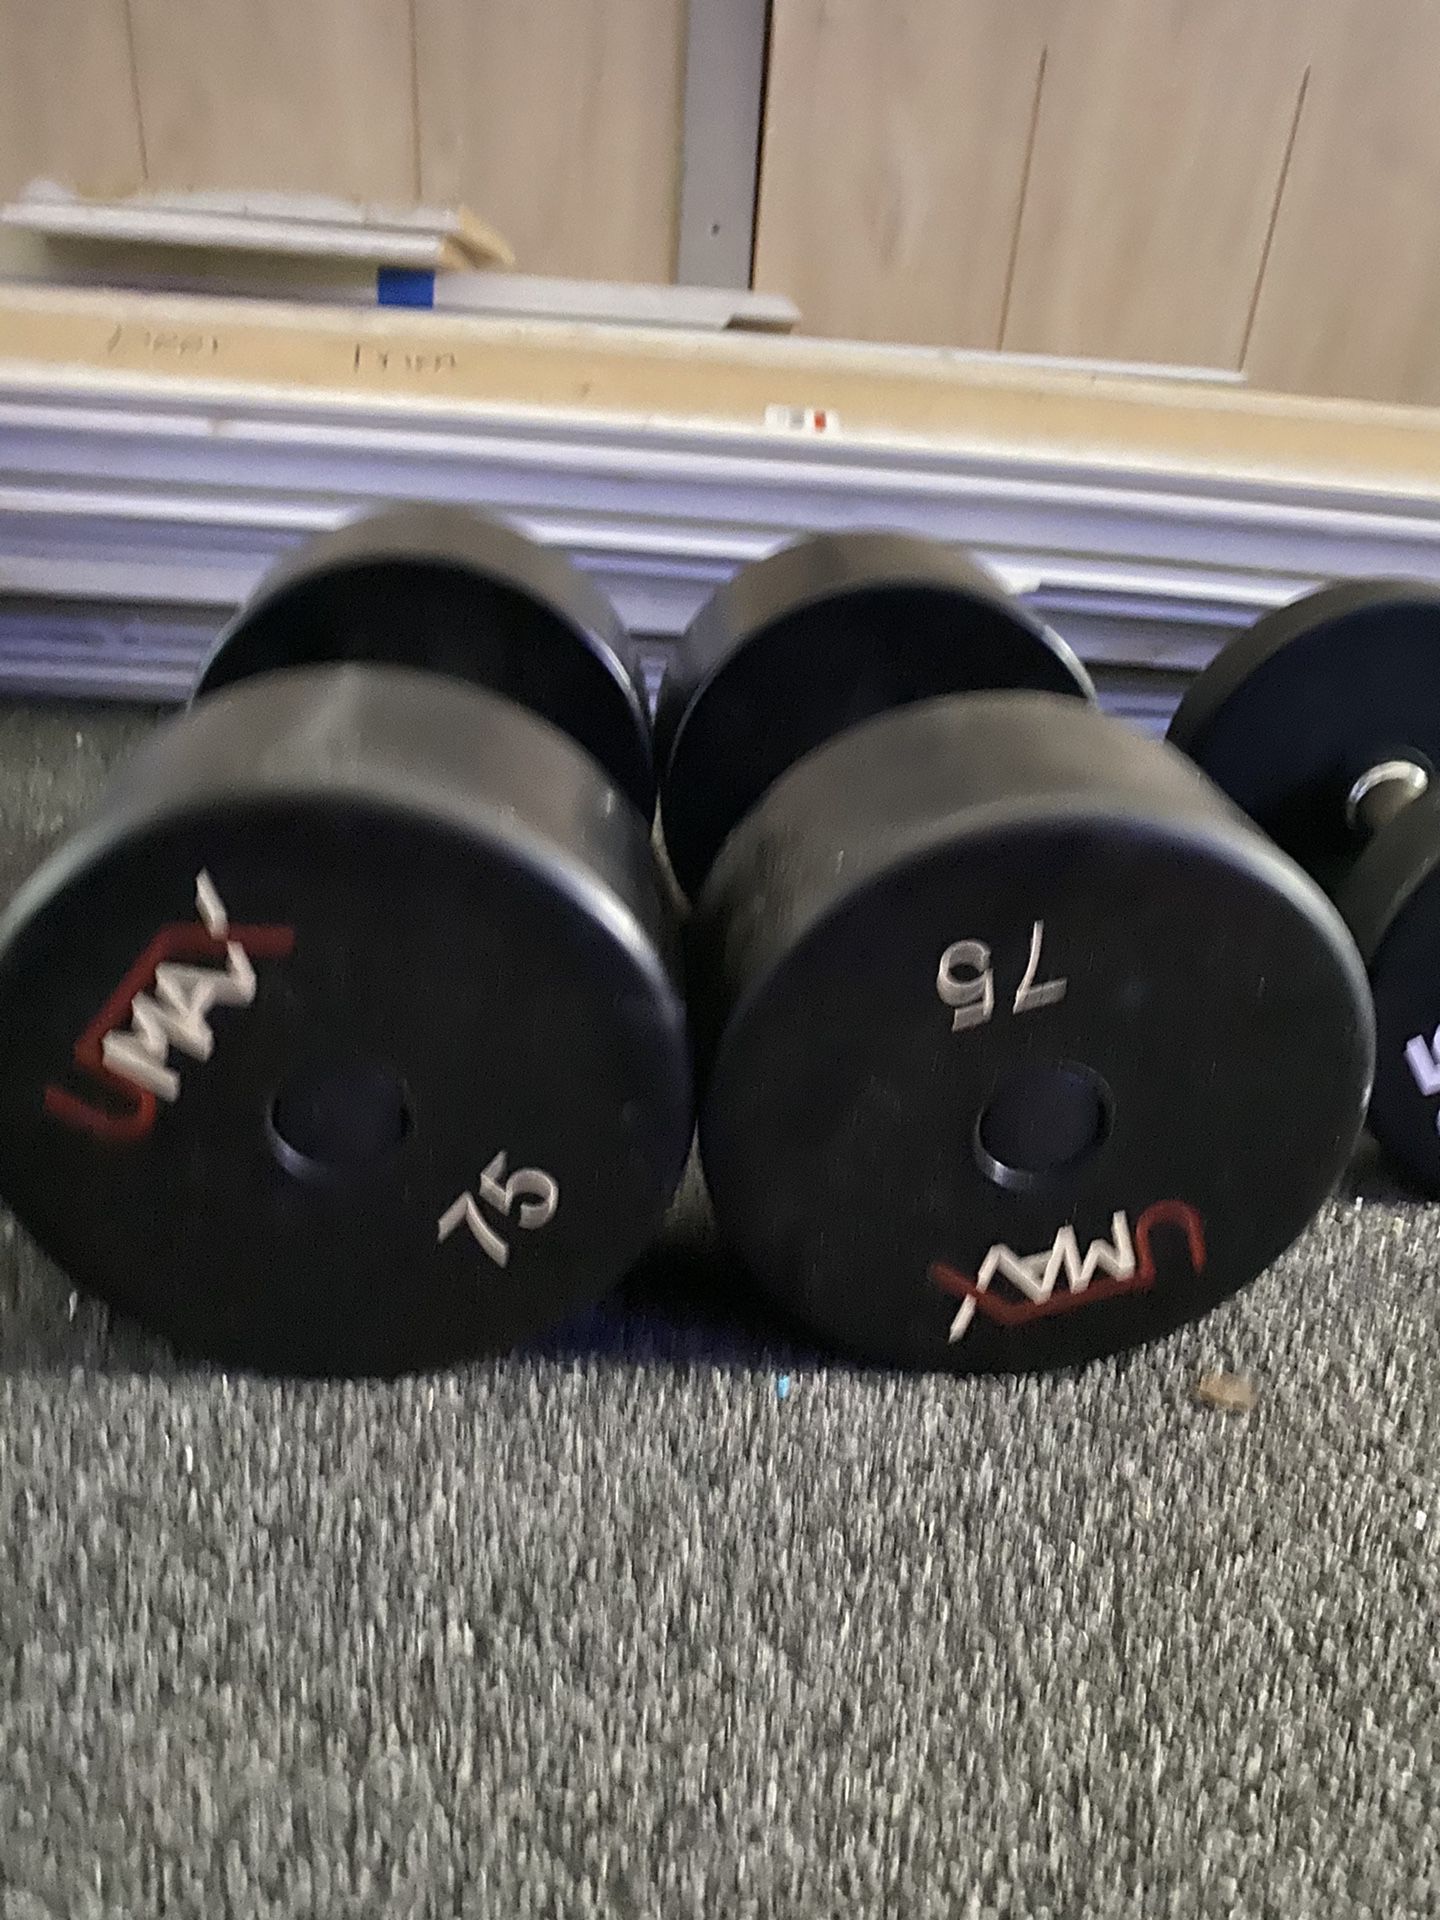 UMAX 75lbs of dumbbells/weights COMMERCIAL GRADE